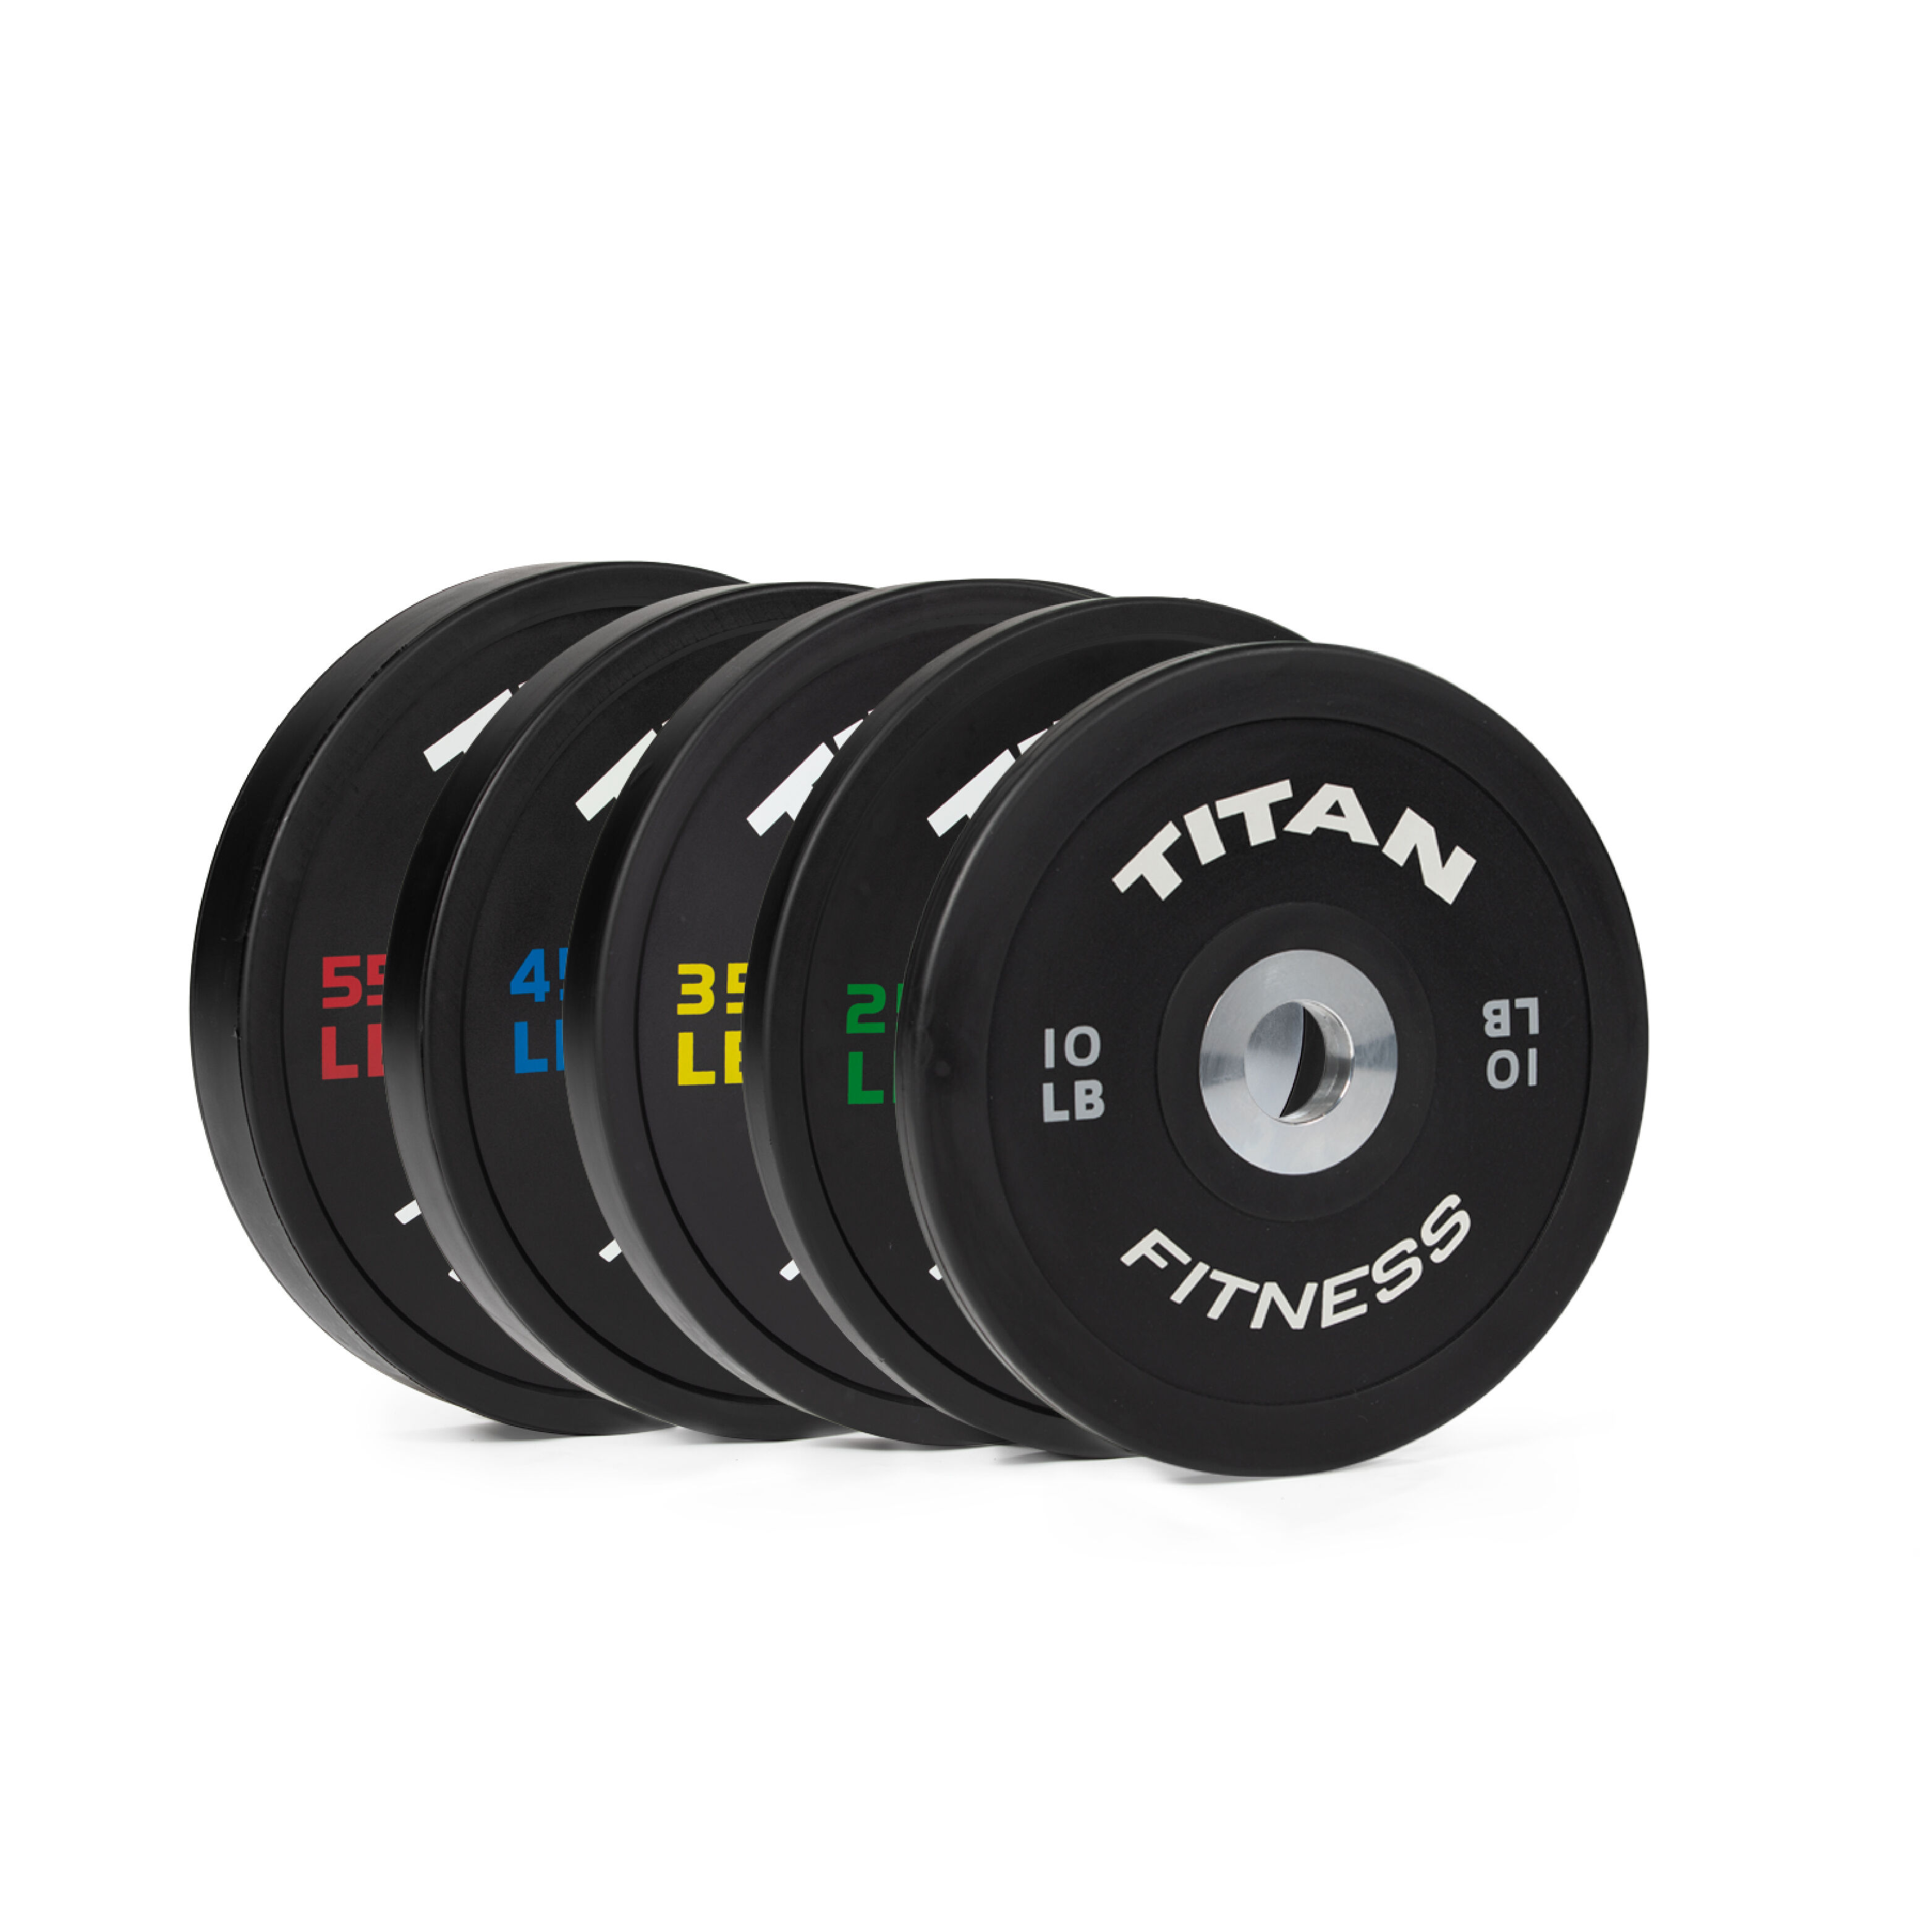 Titan Cast Iron Olympic Weight Plates 245 LB Set